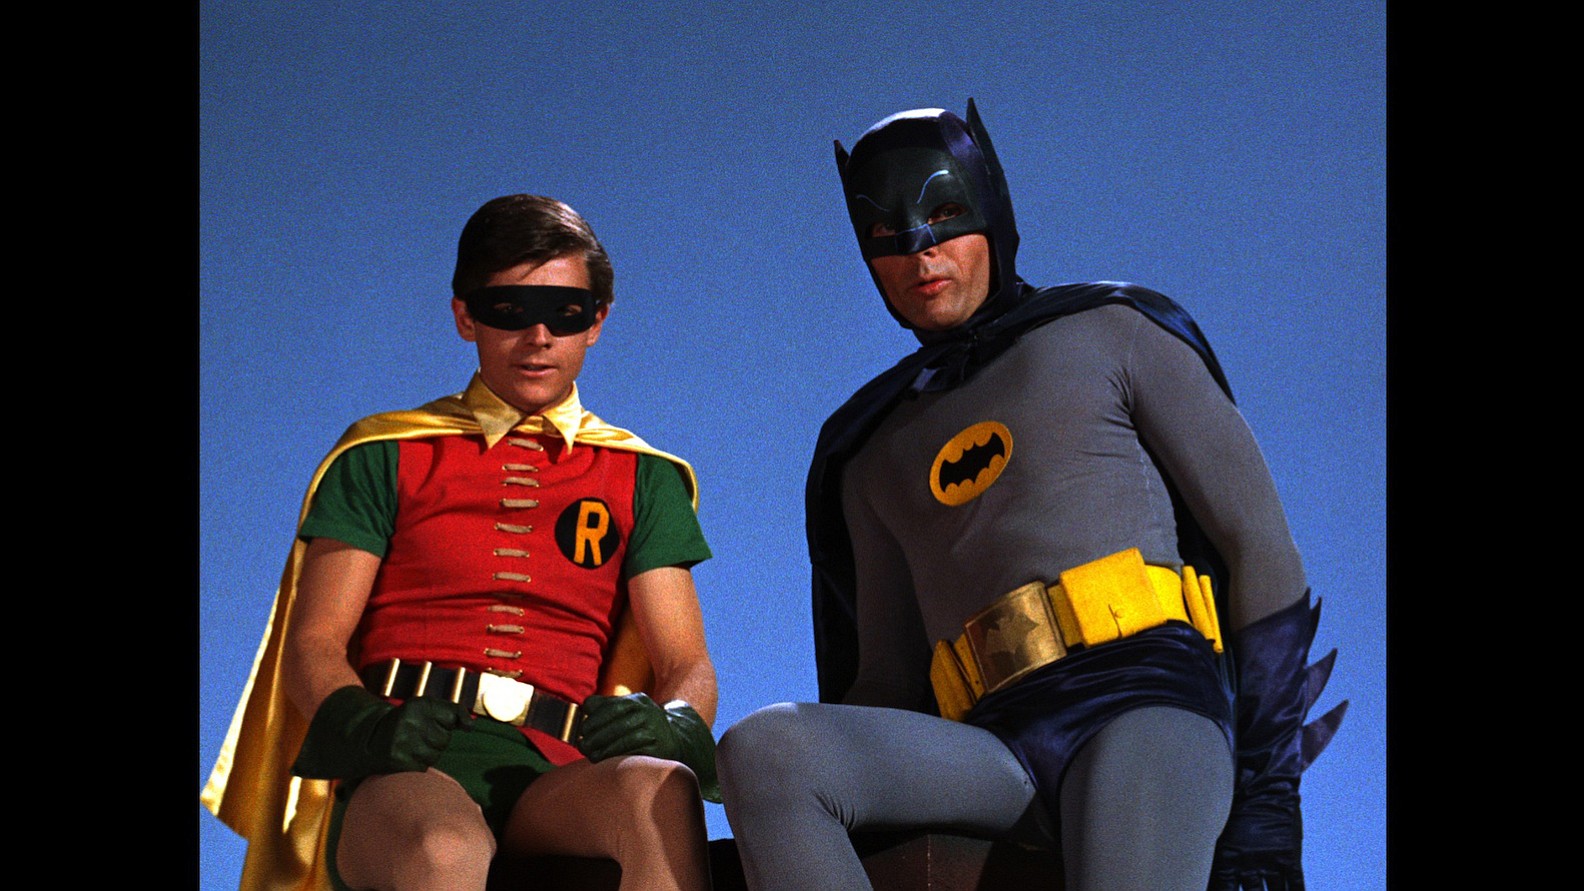 Adam West (as Batman in the '60s series) jokes that sidekick Burt Ward (as Robin) was quite the &quot;scene-stealer.&quot;